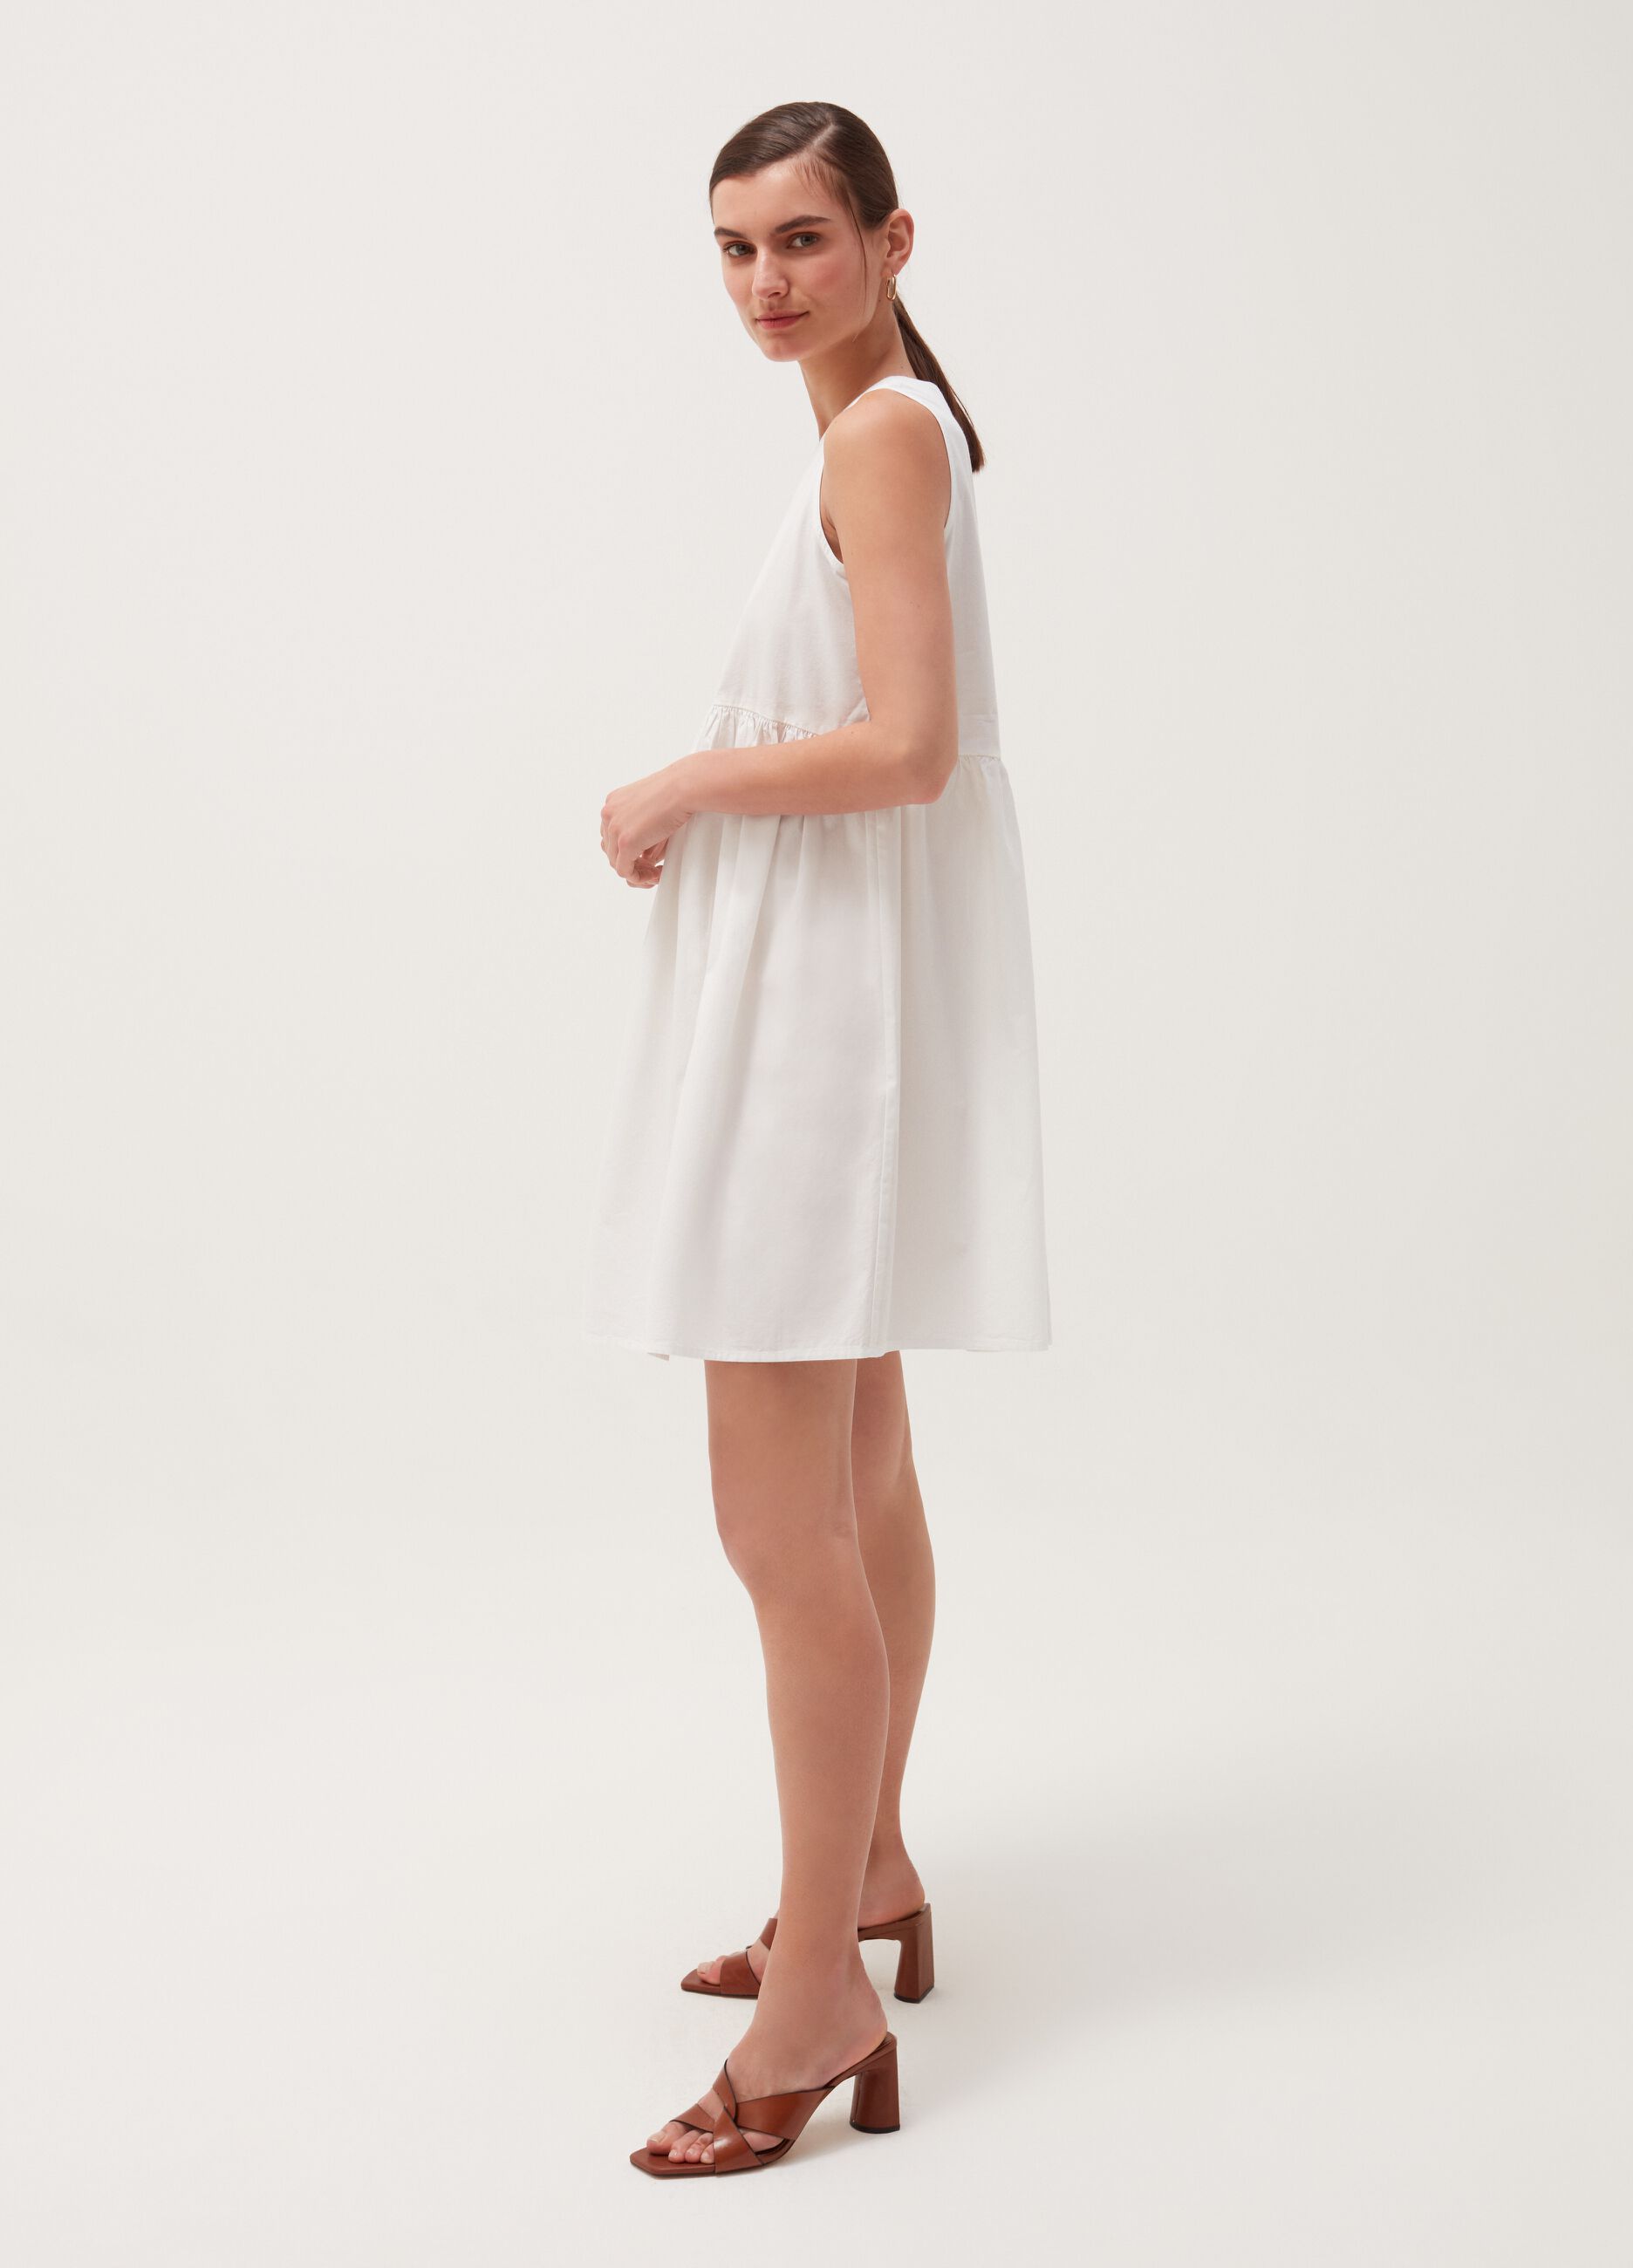 Sleeveless cotton dress